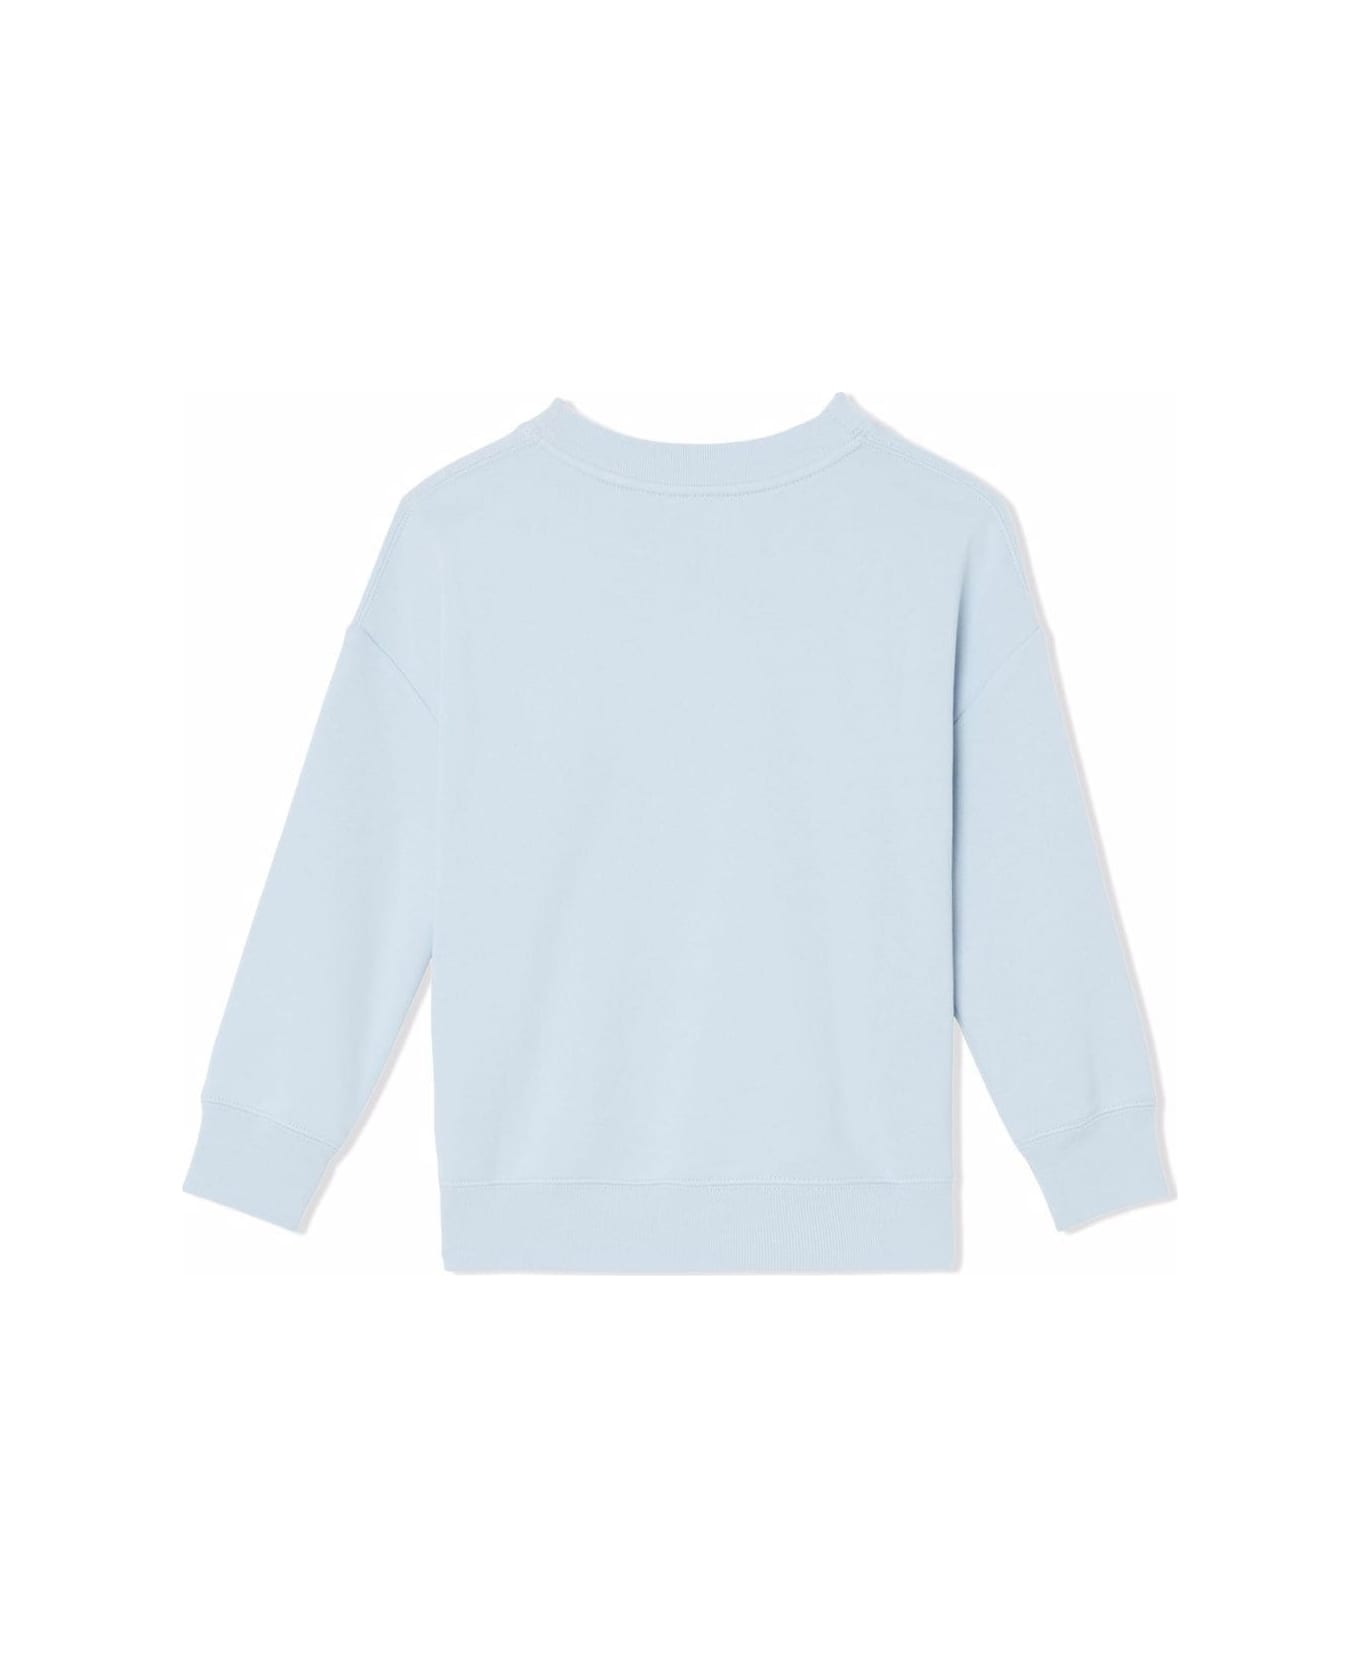 Burberry Kids Boy's Light Blue Euguene Cotton Sweatshirt With Logo - Light blue